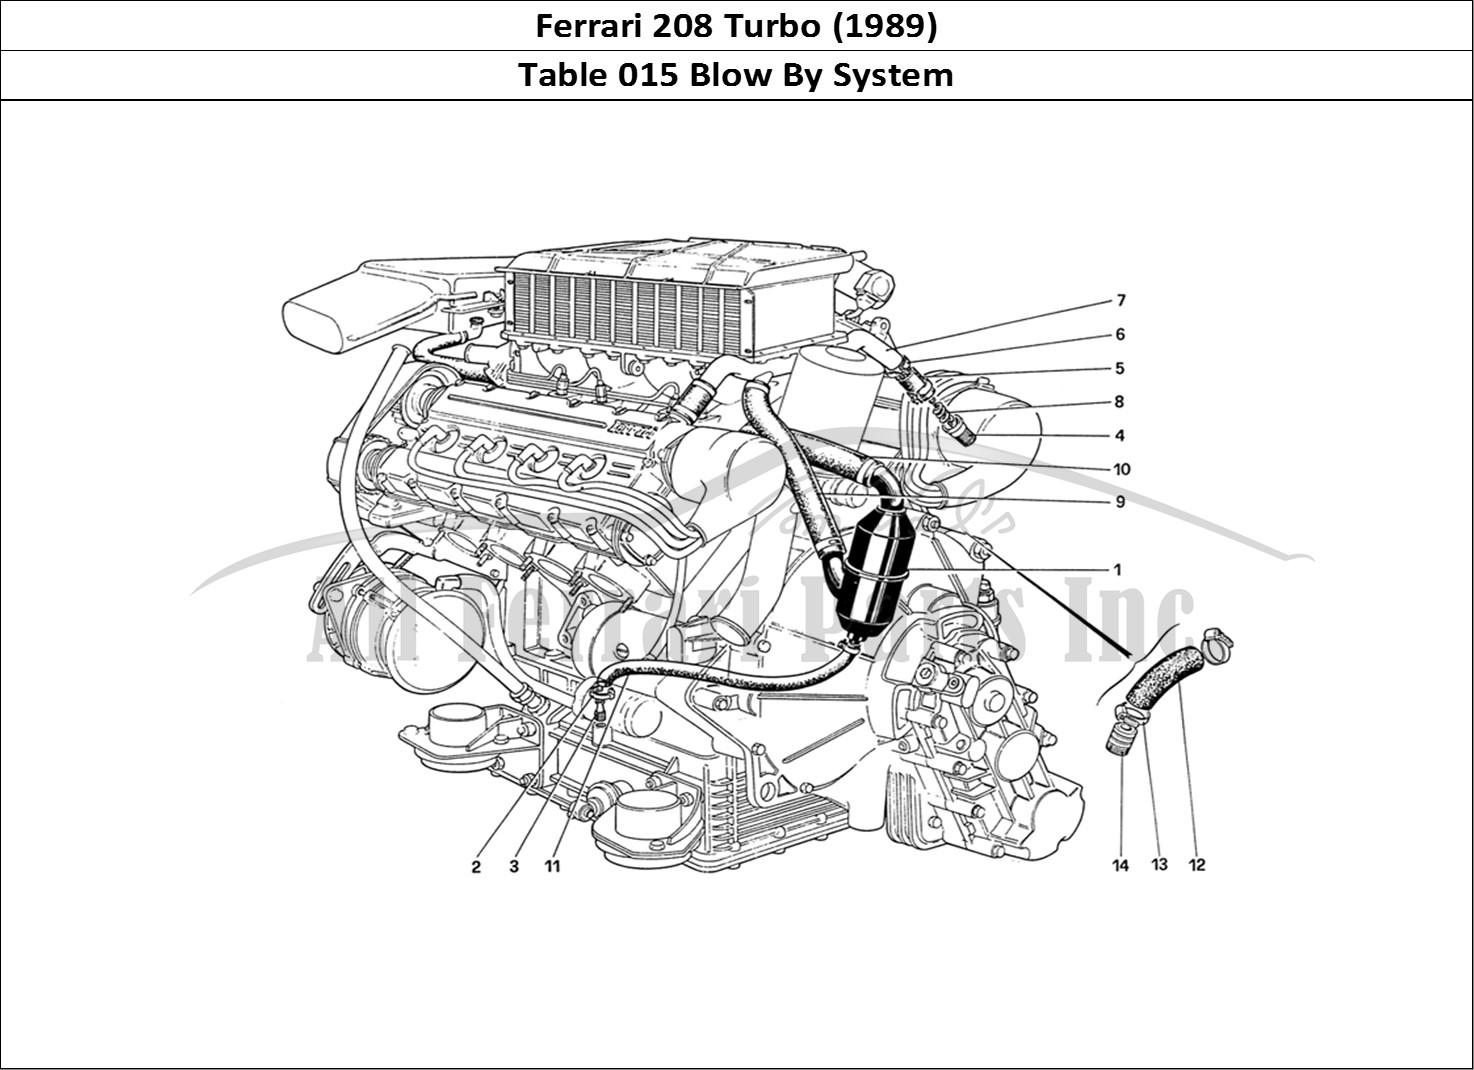 Ferrari Parts Ferrari 208 Turbo (1989) Page 015 Blow - By System